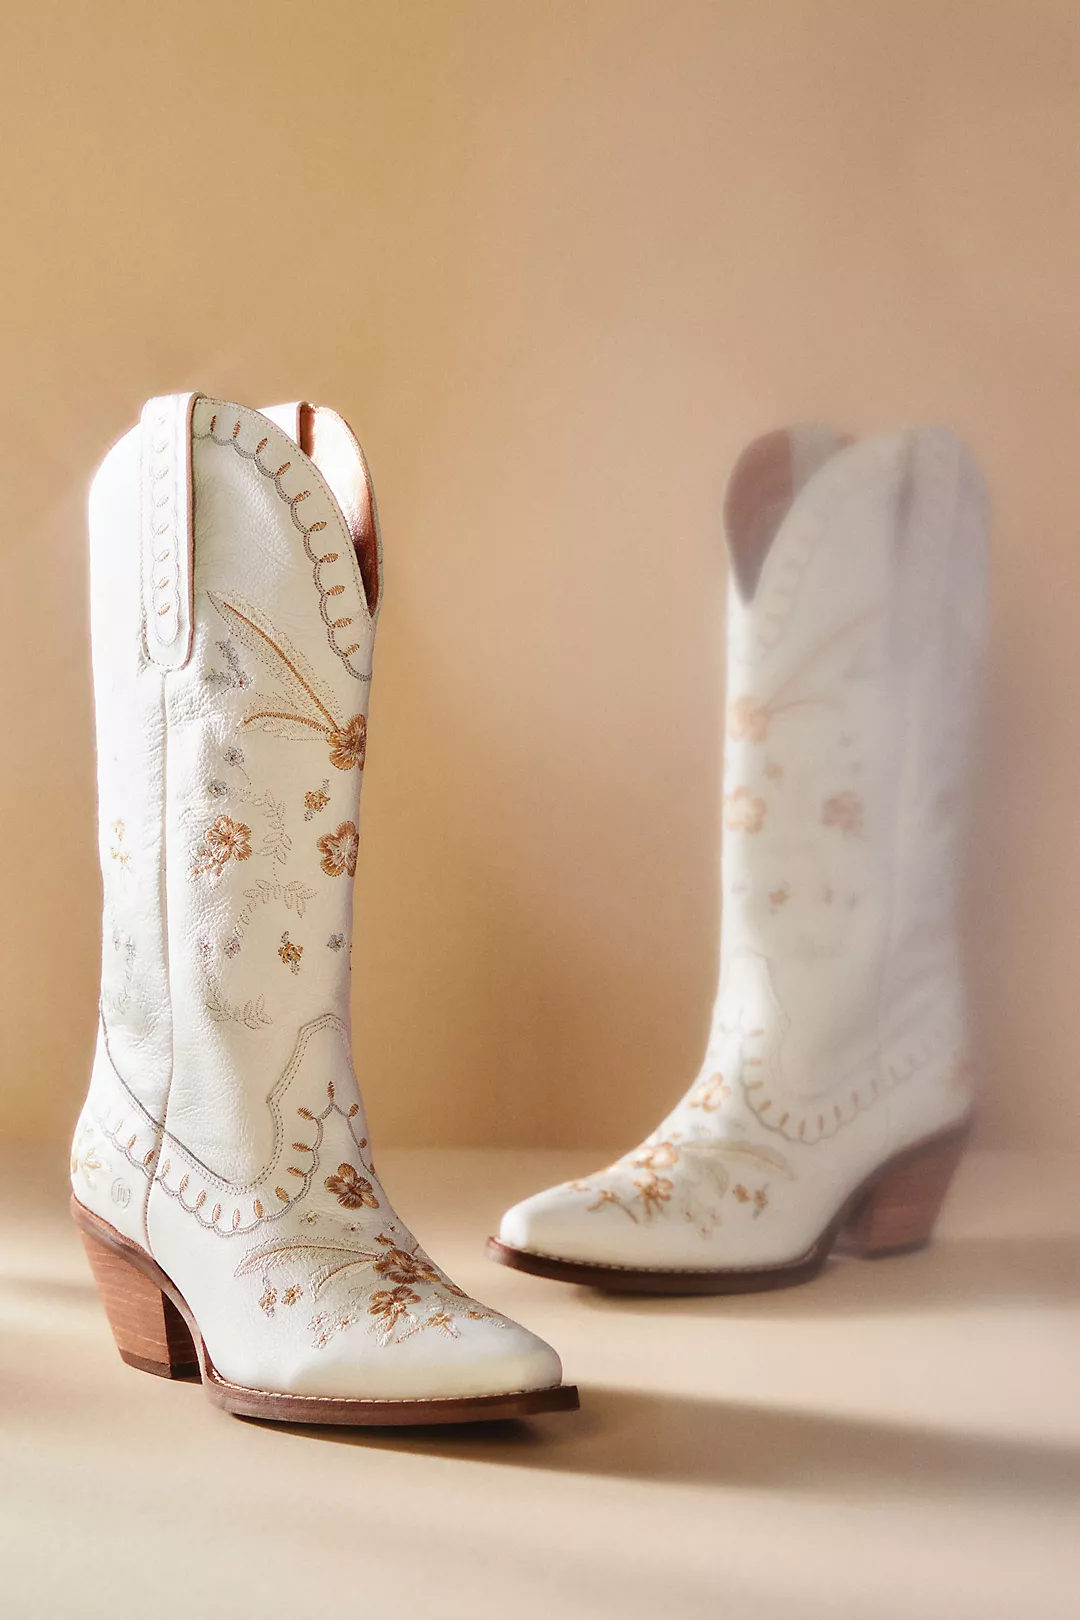 anthropologie white cowboy boots 70s fashion